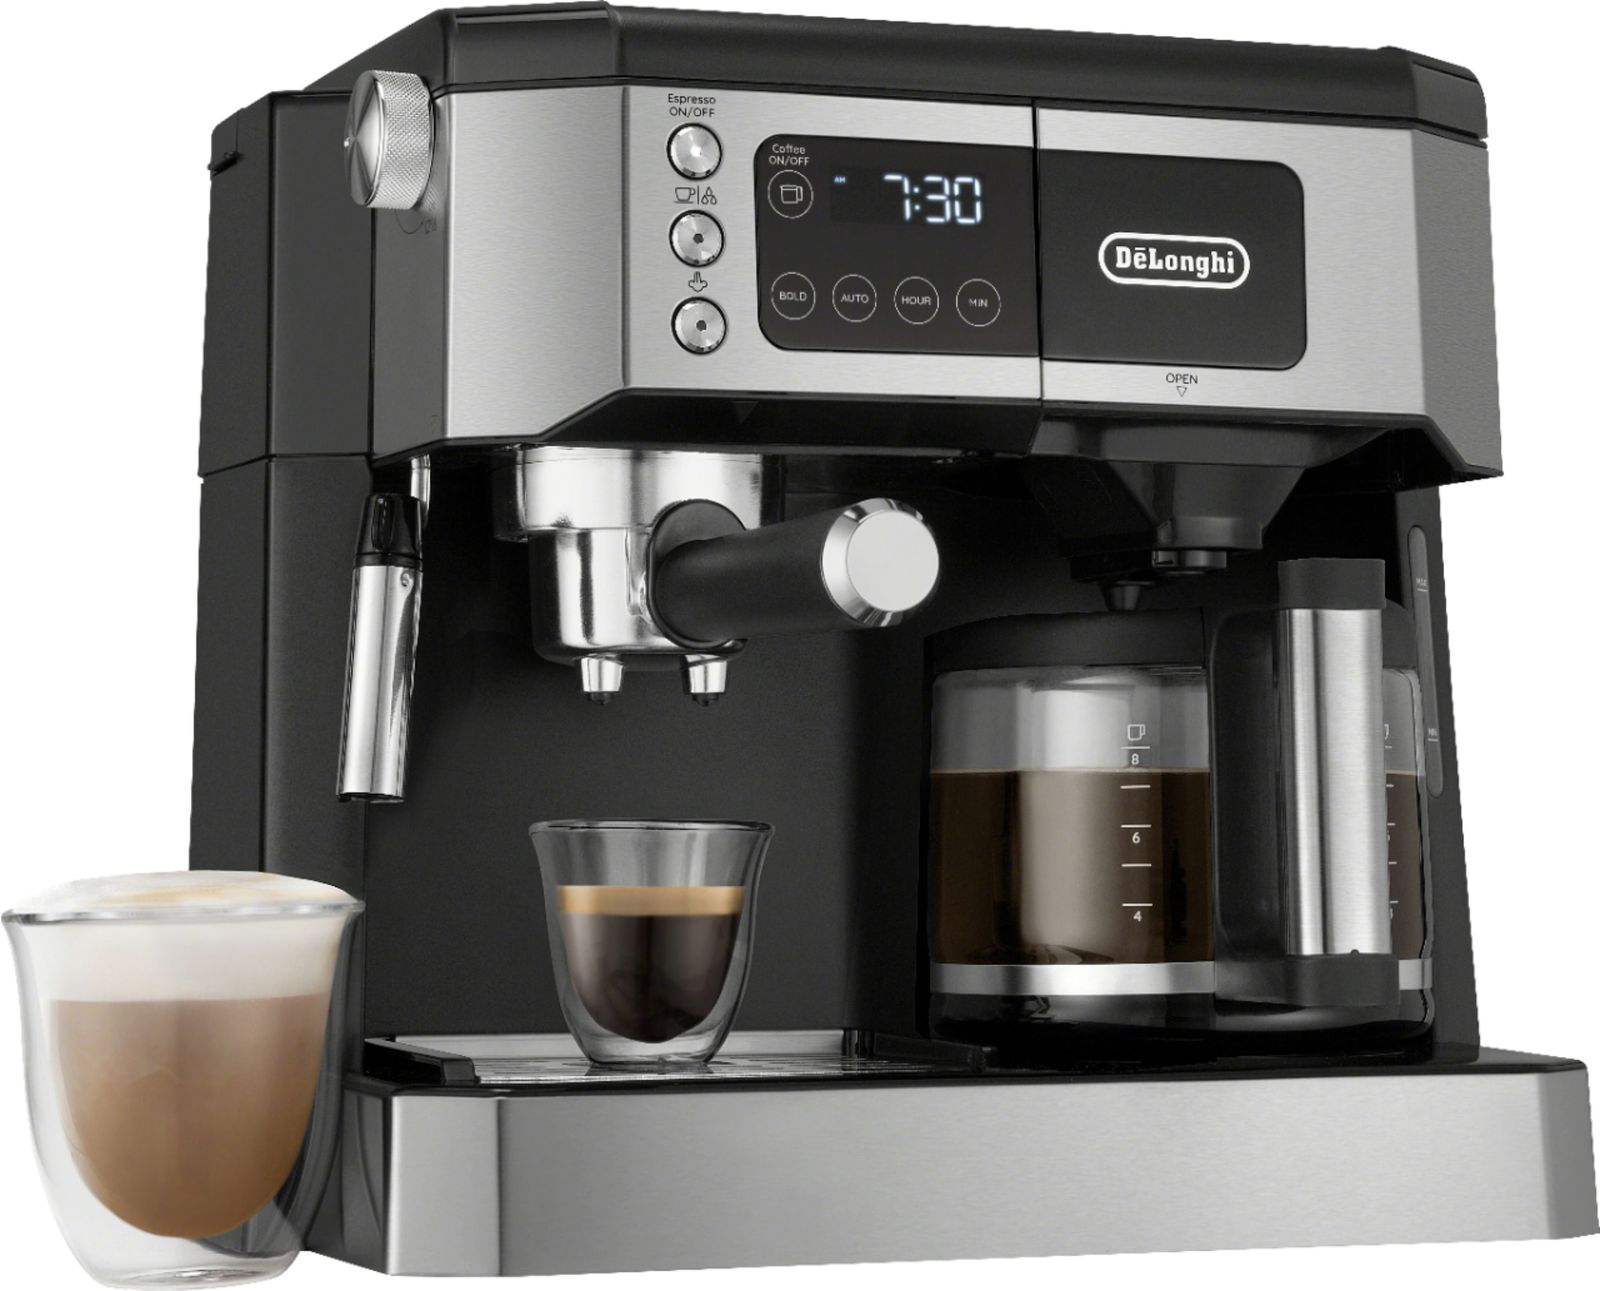 Digital All-In-One Combination Coffee And Espresso Machine